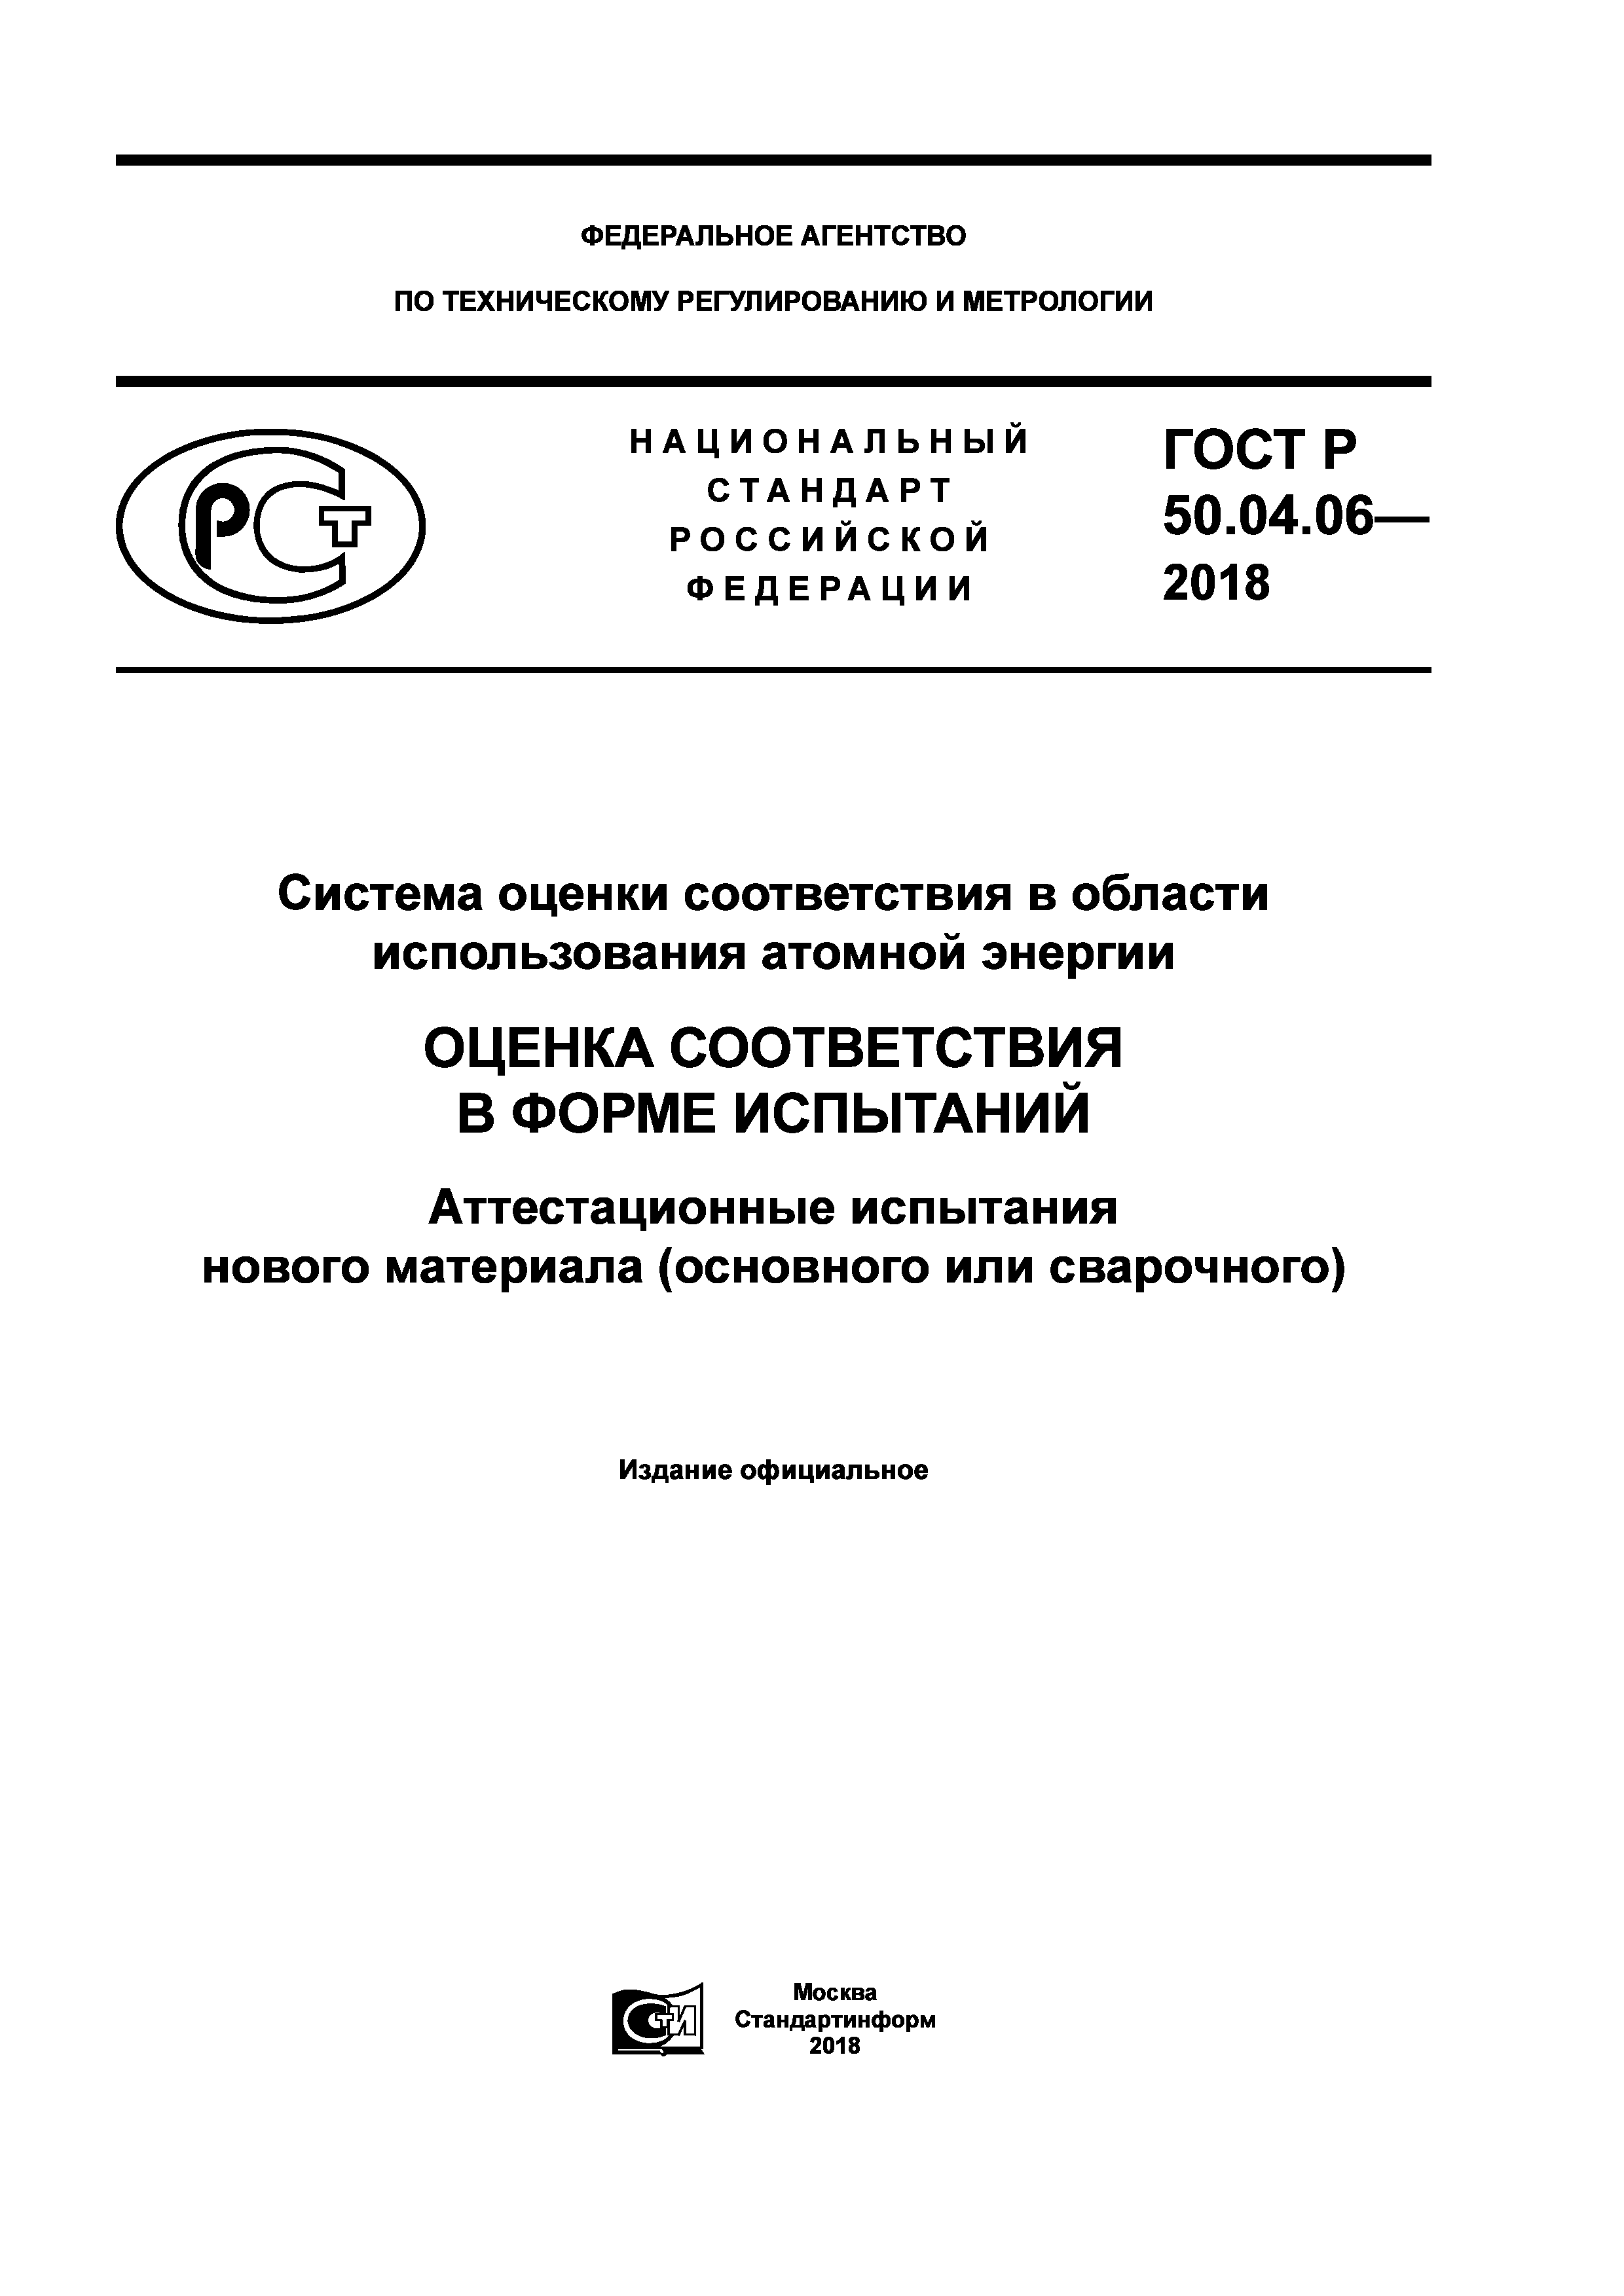 ГОСТ Р 50.04.06-2018